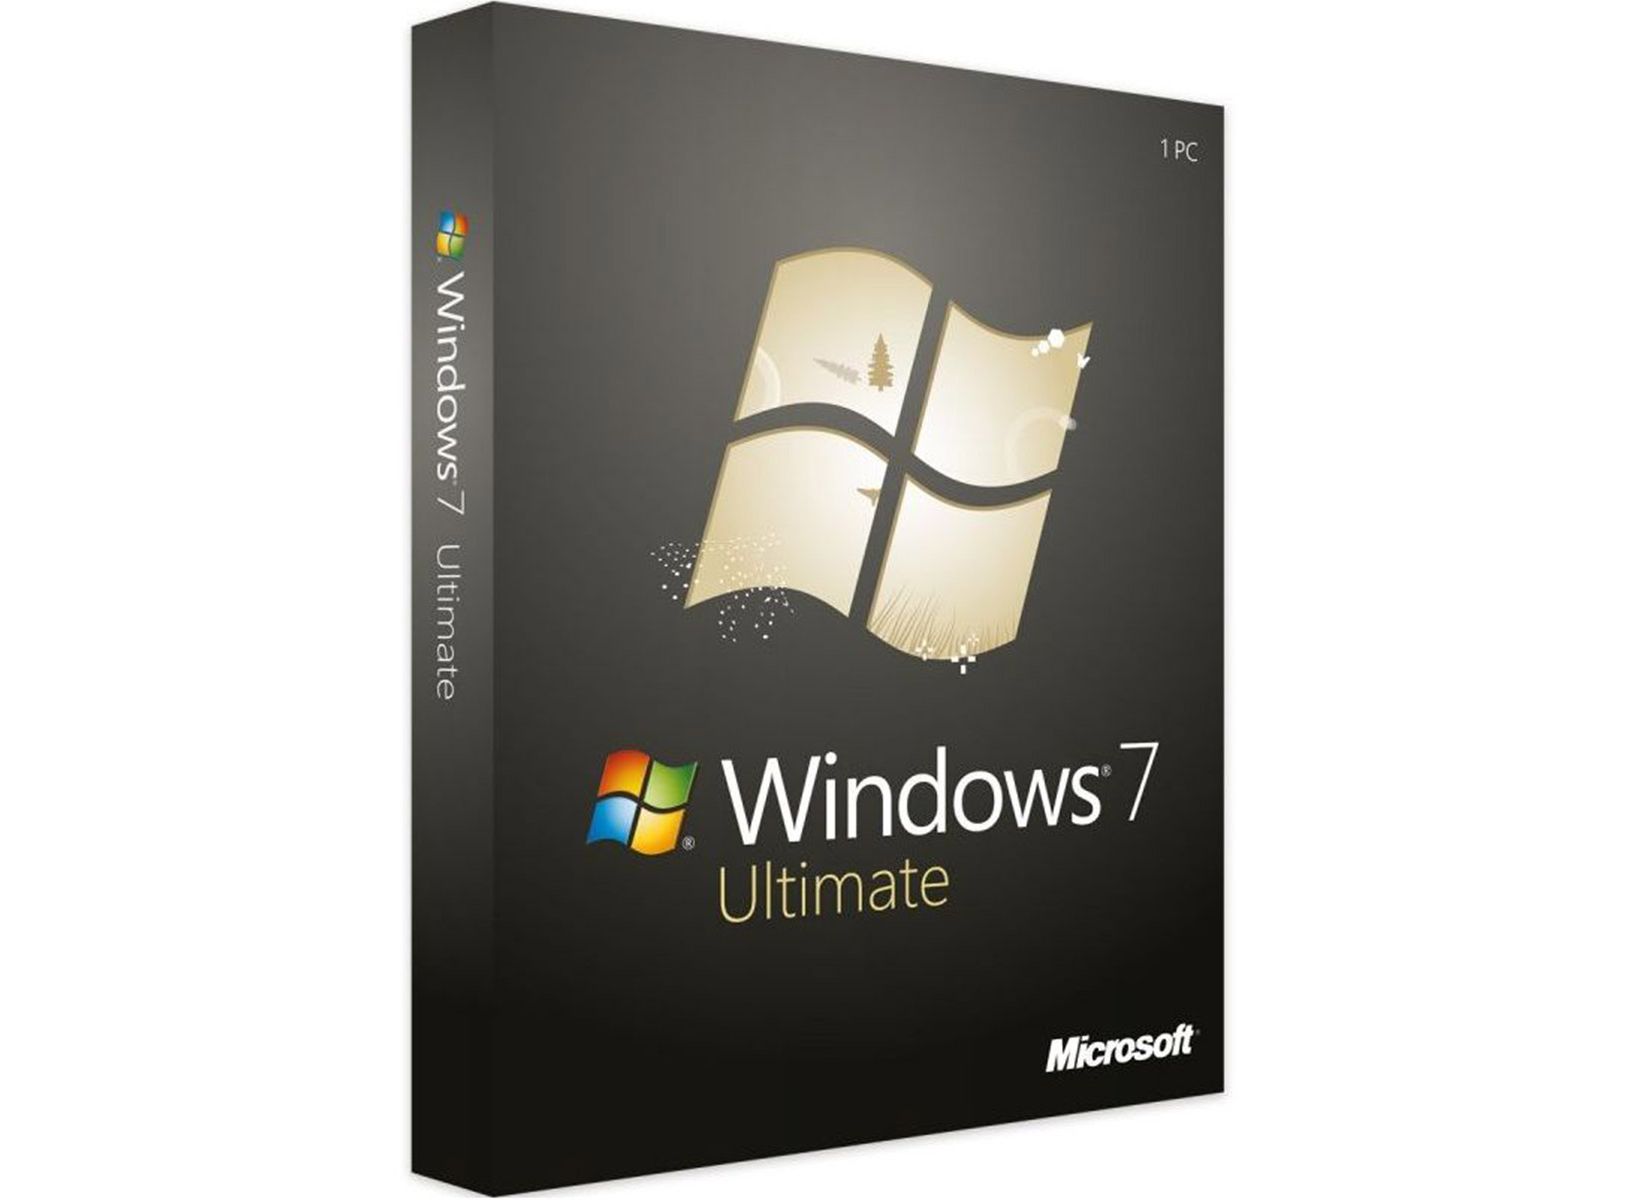 whatsapp for windows 7 ultimate 32 bit